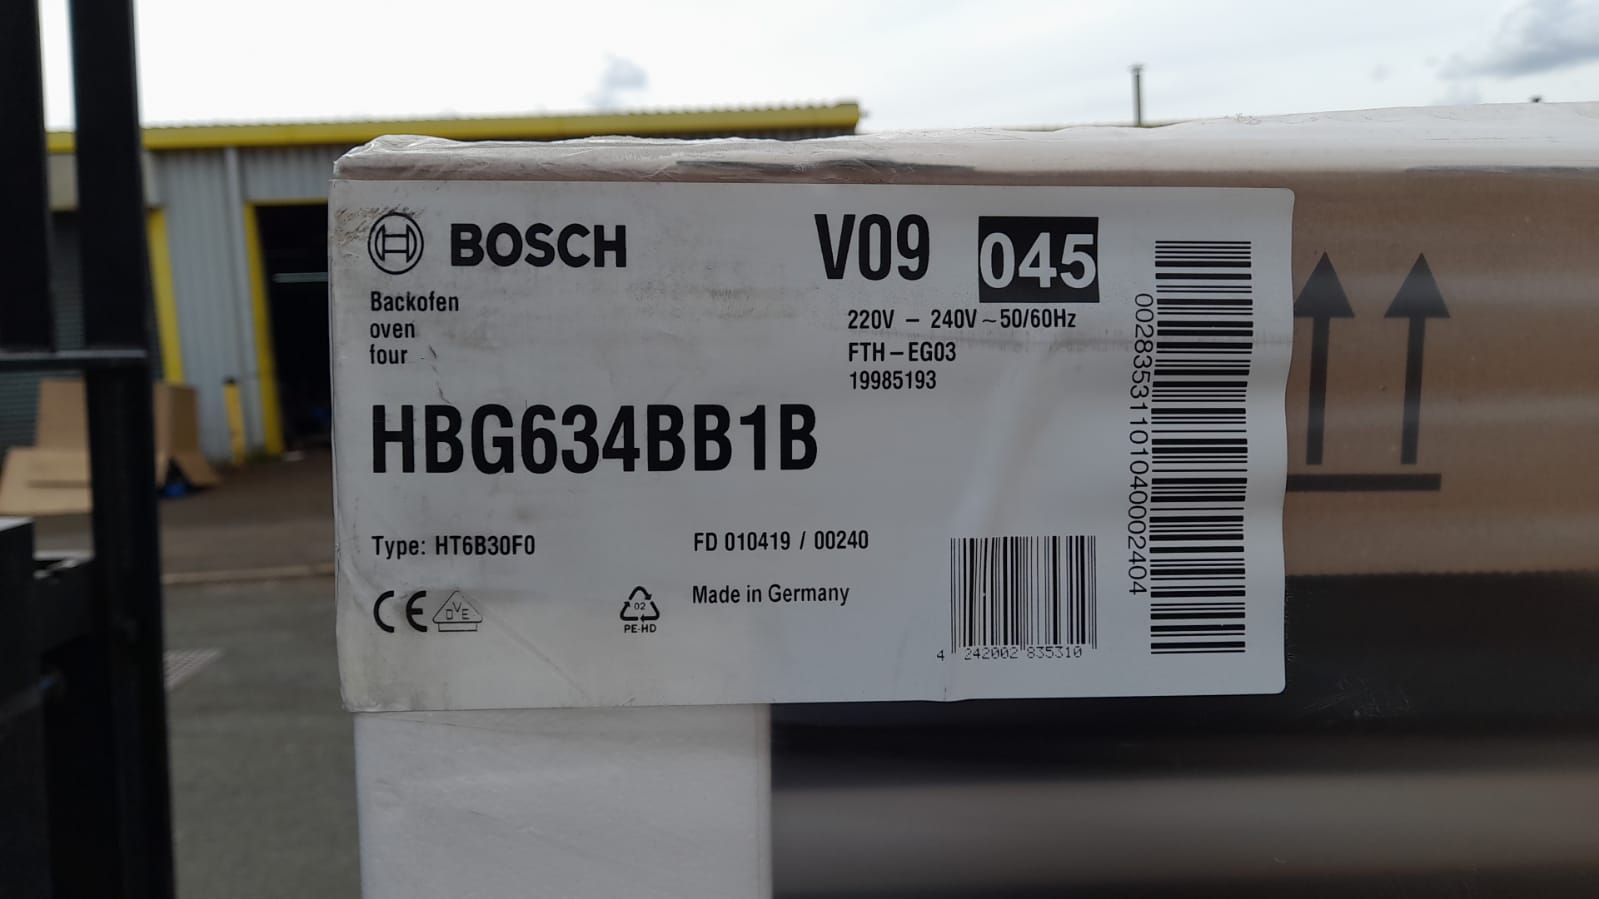 Bosch Serie 8 HBG634BB1B Integrated Single Multifunction Oven - Black -5422